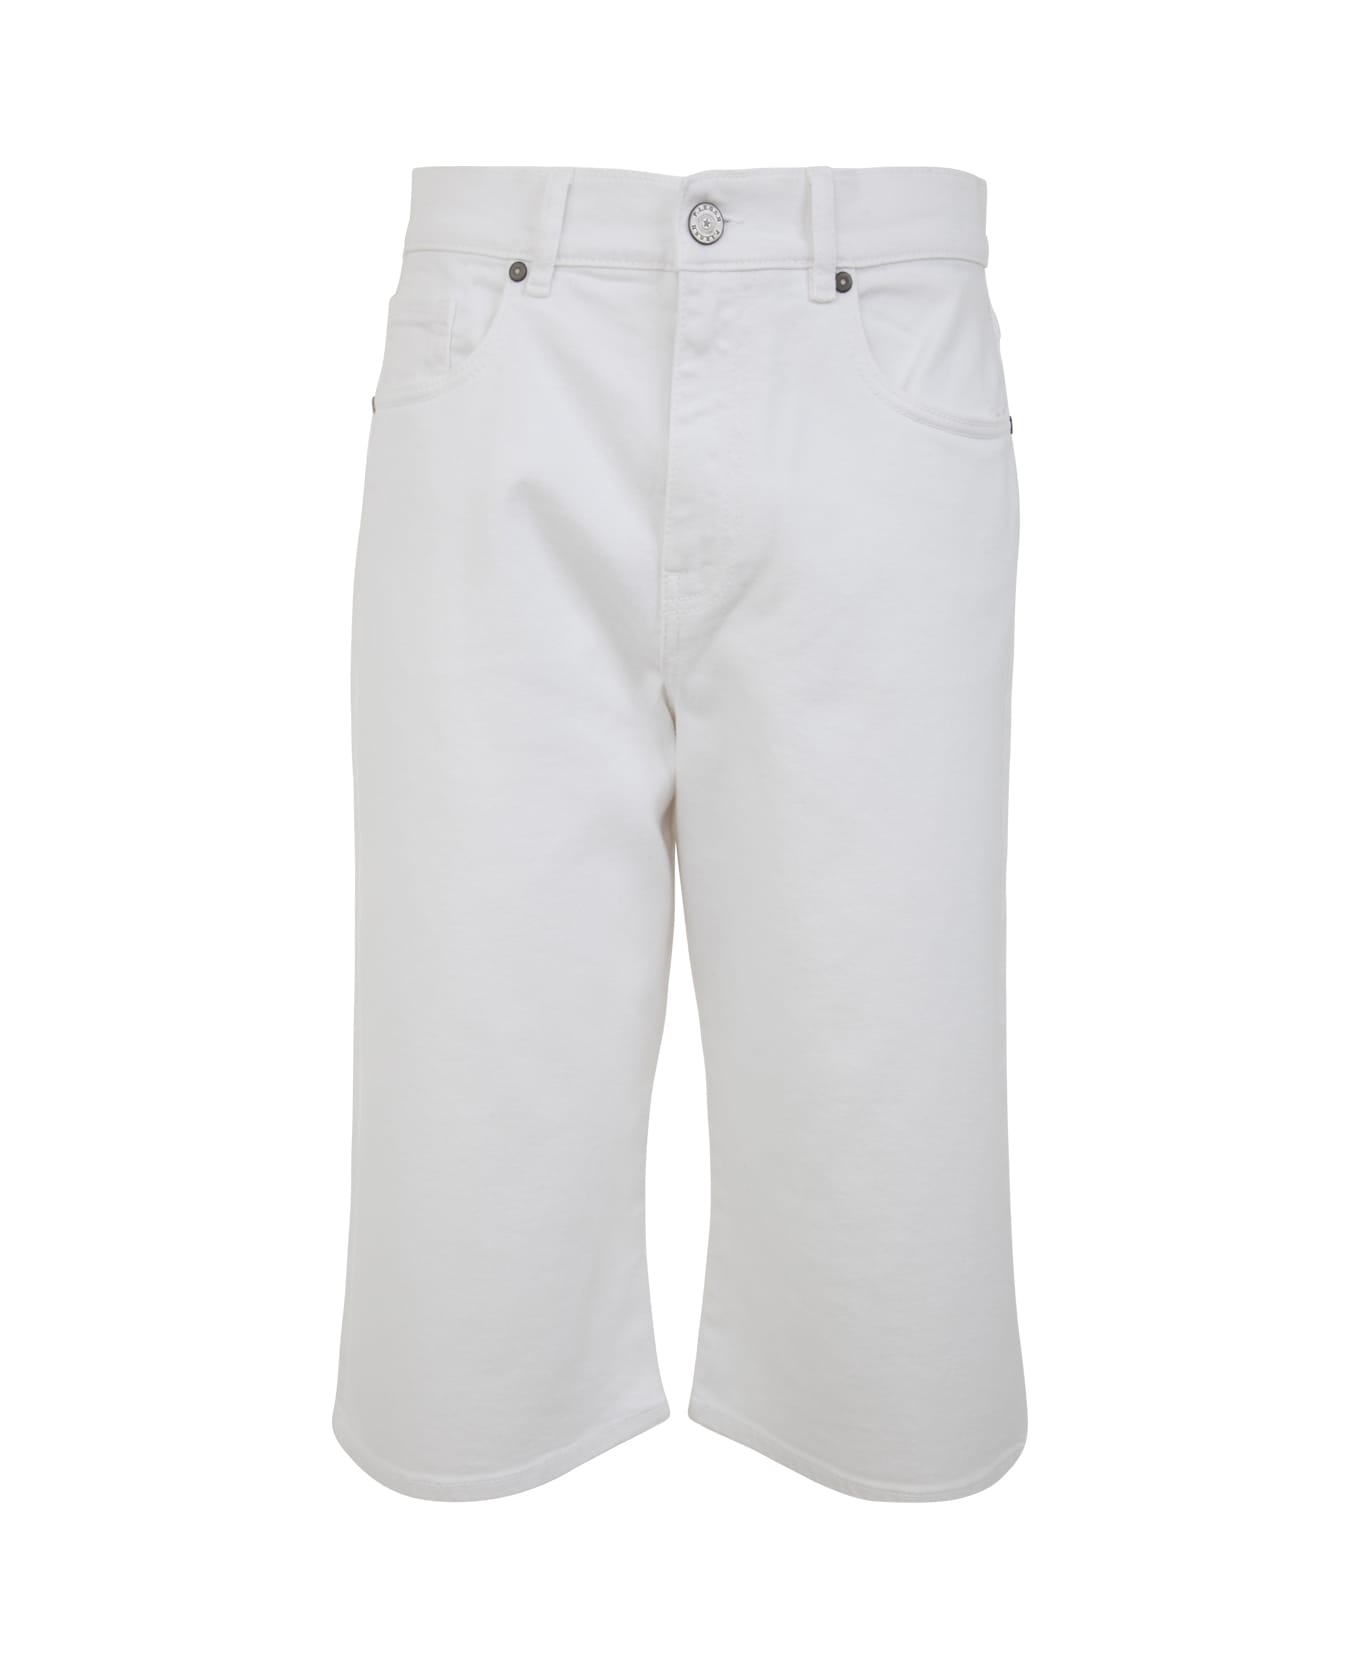 Parosh Drill Cotton Trousers - White ボトムス